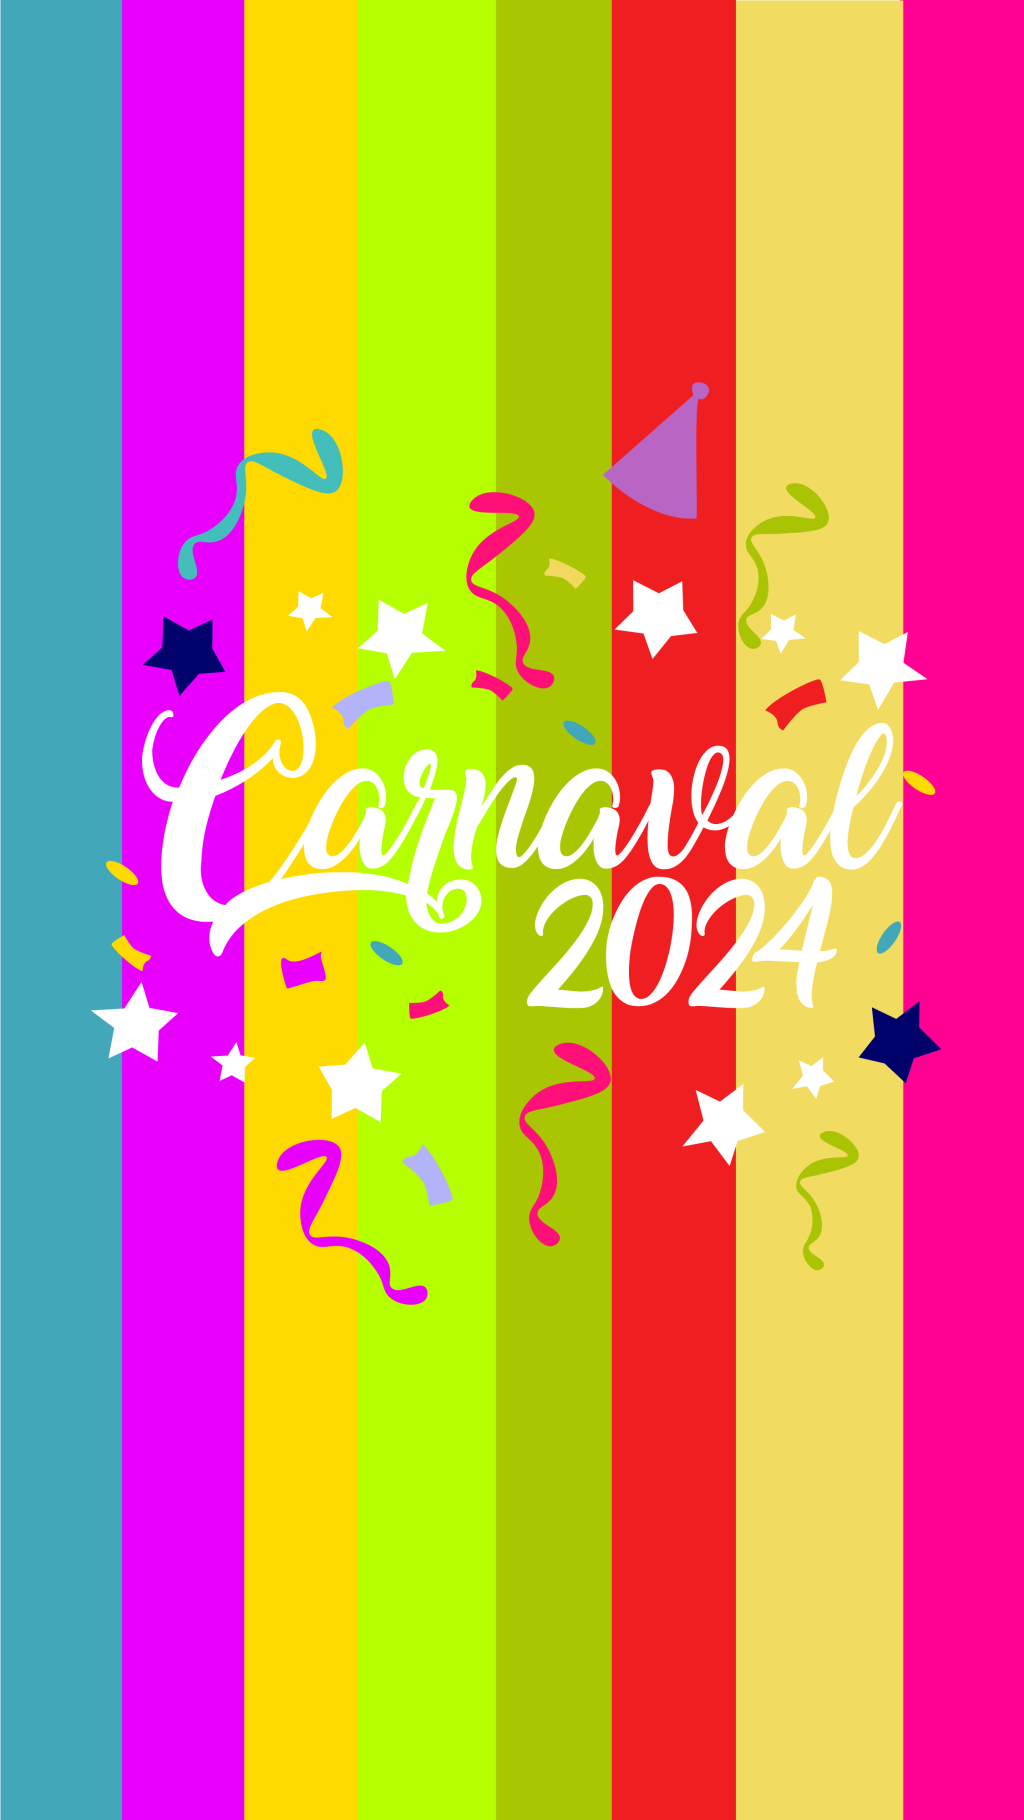 Carnaval’24